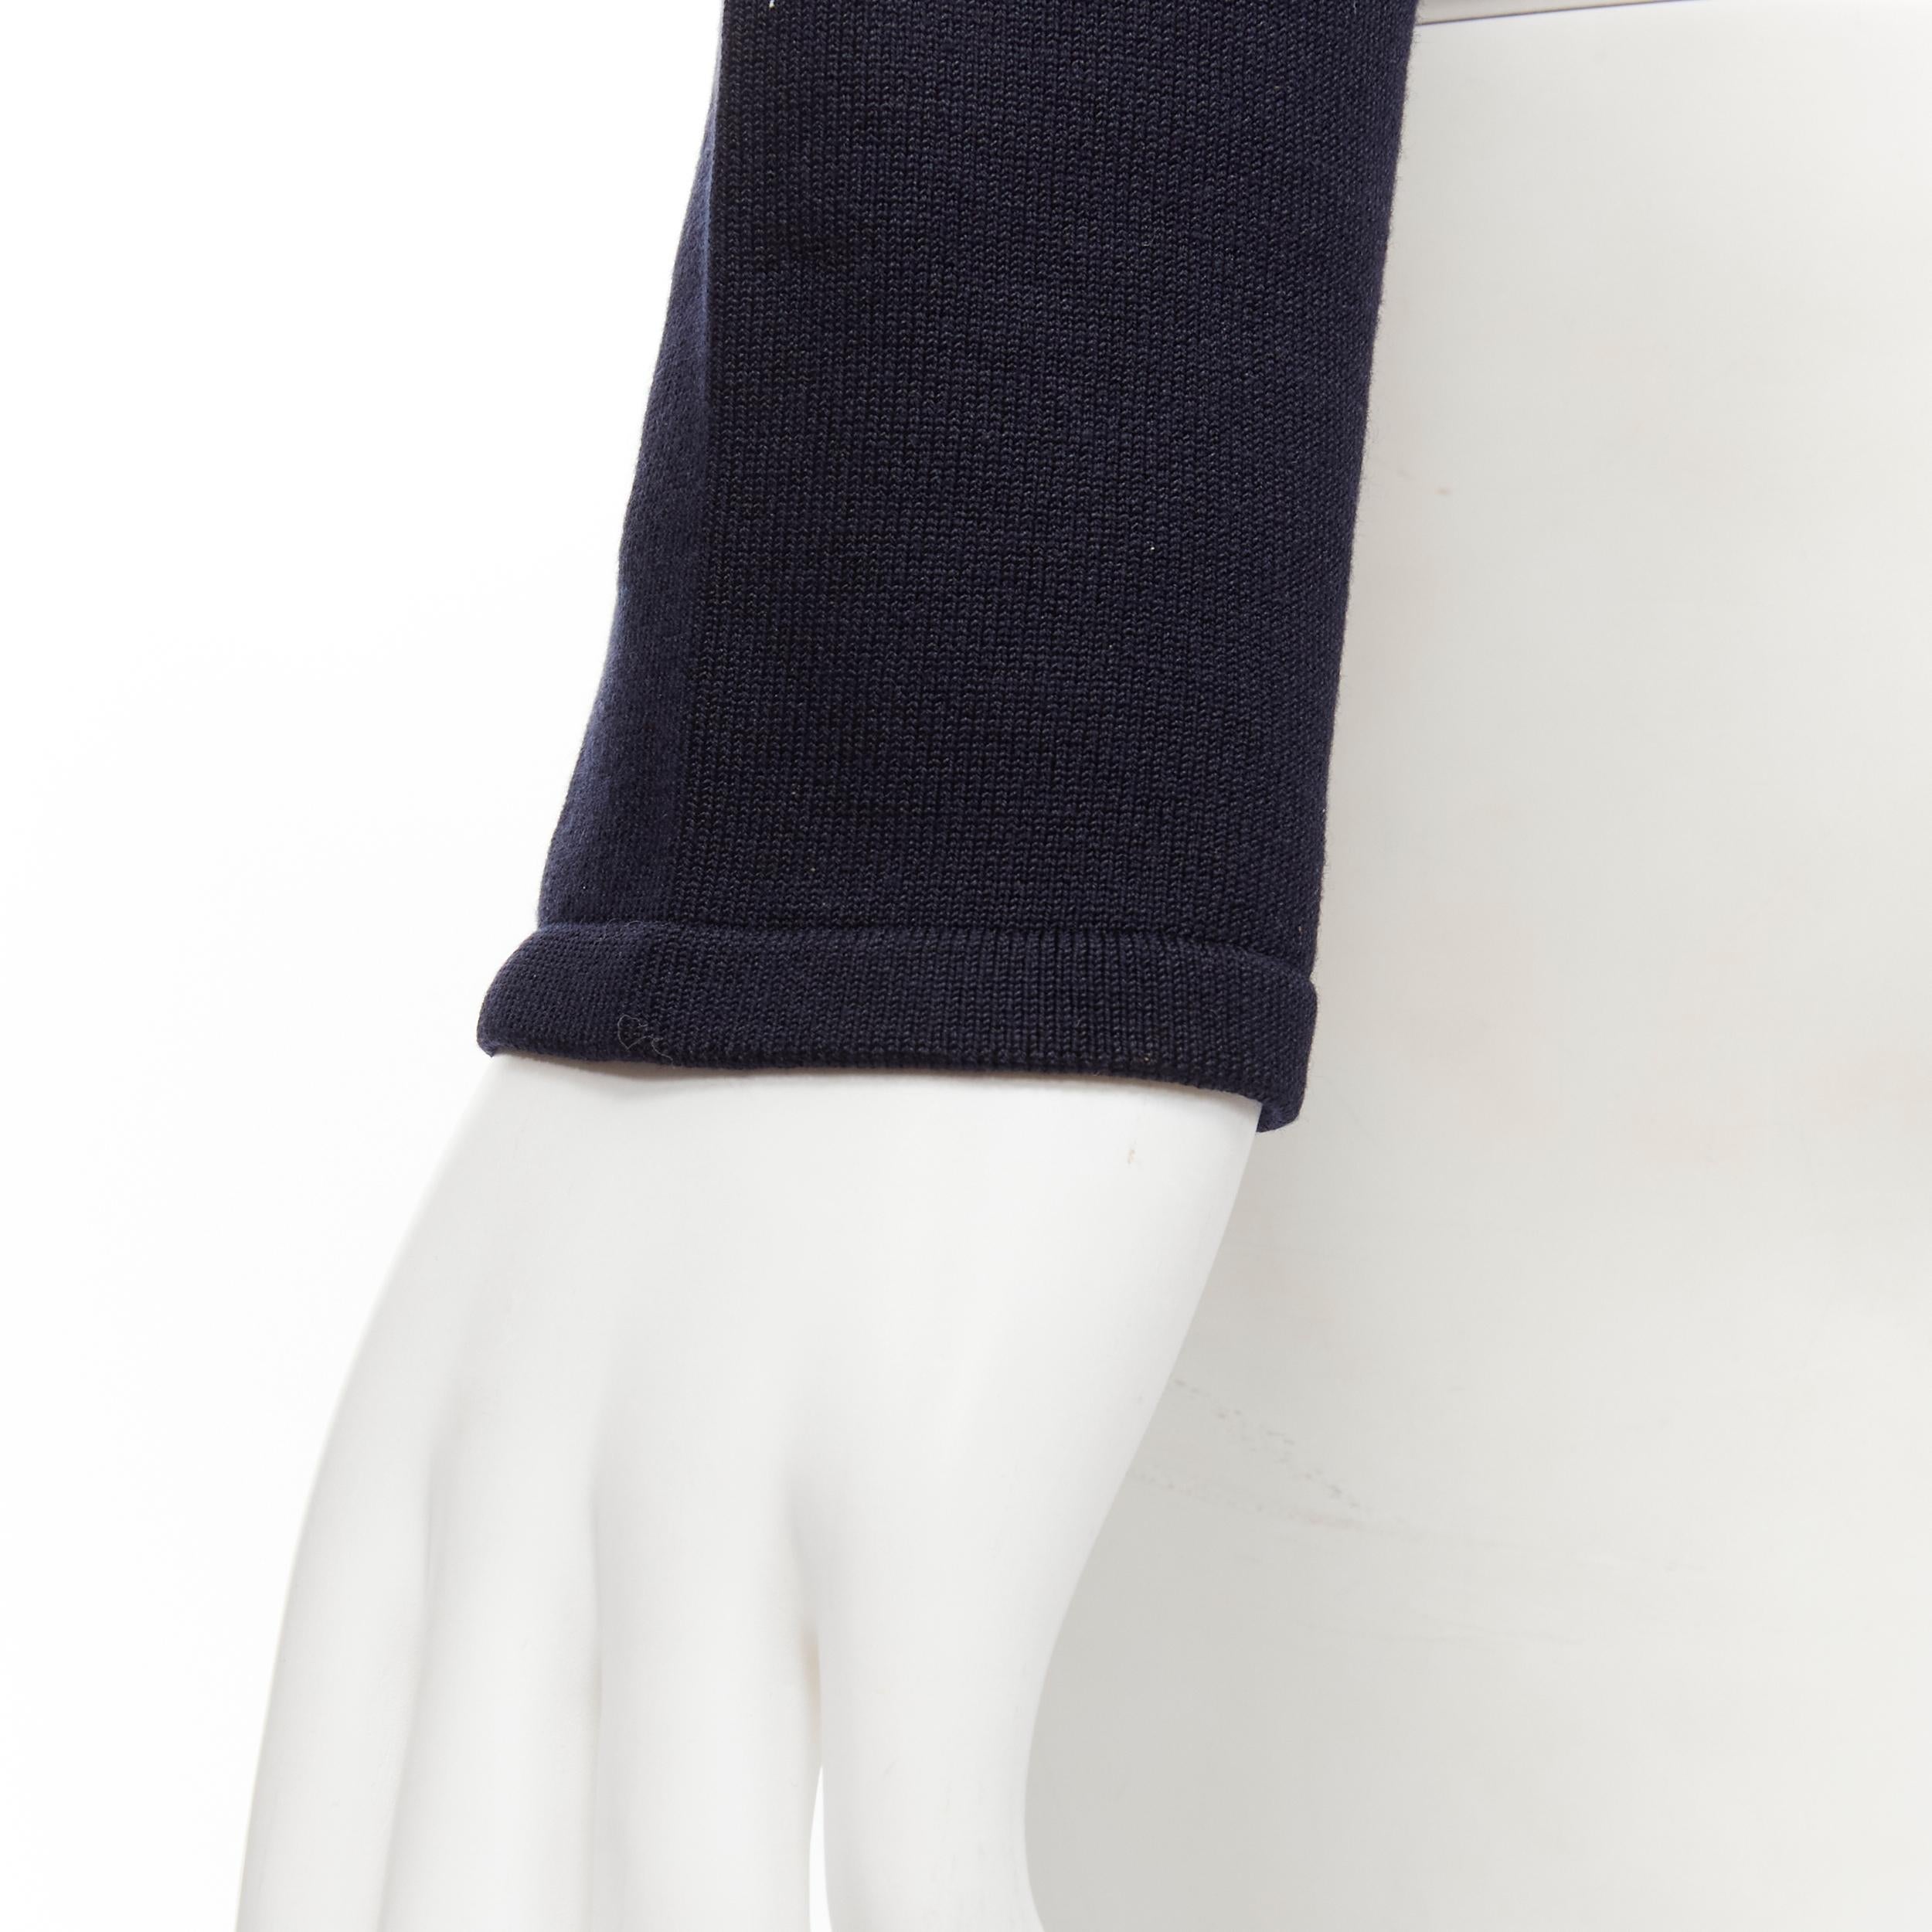 KORS MICHAEL KORS navy blue silk nylon knit long sleeve turtleneck sweater S For Sale 5